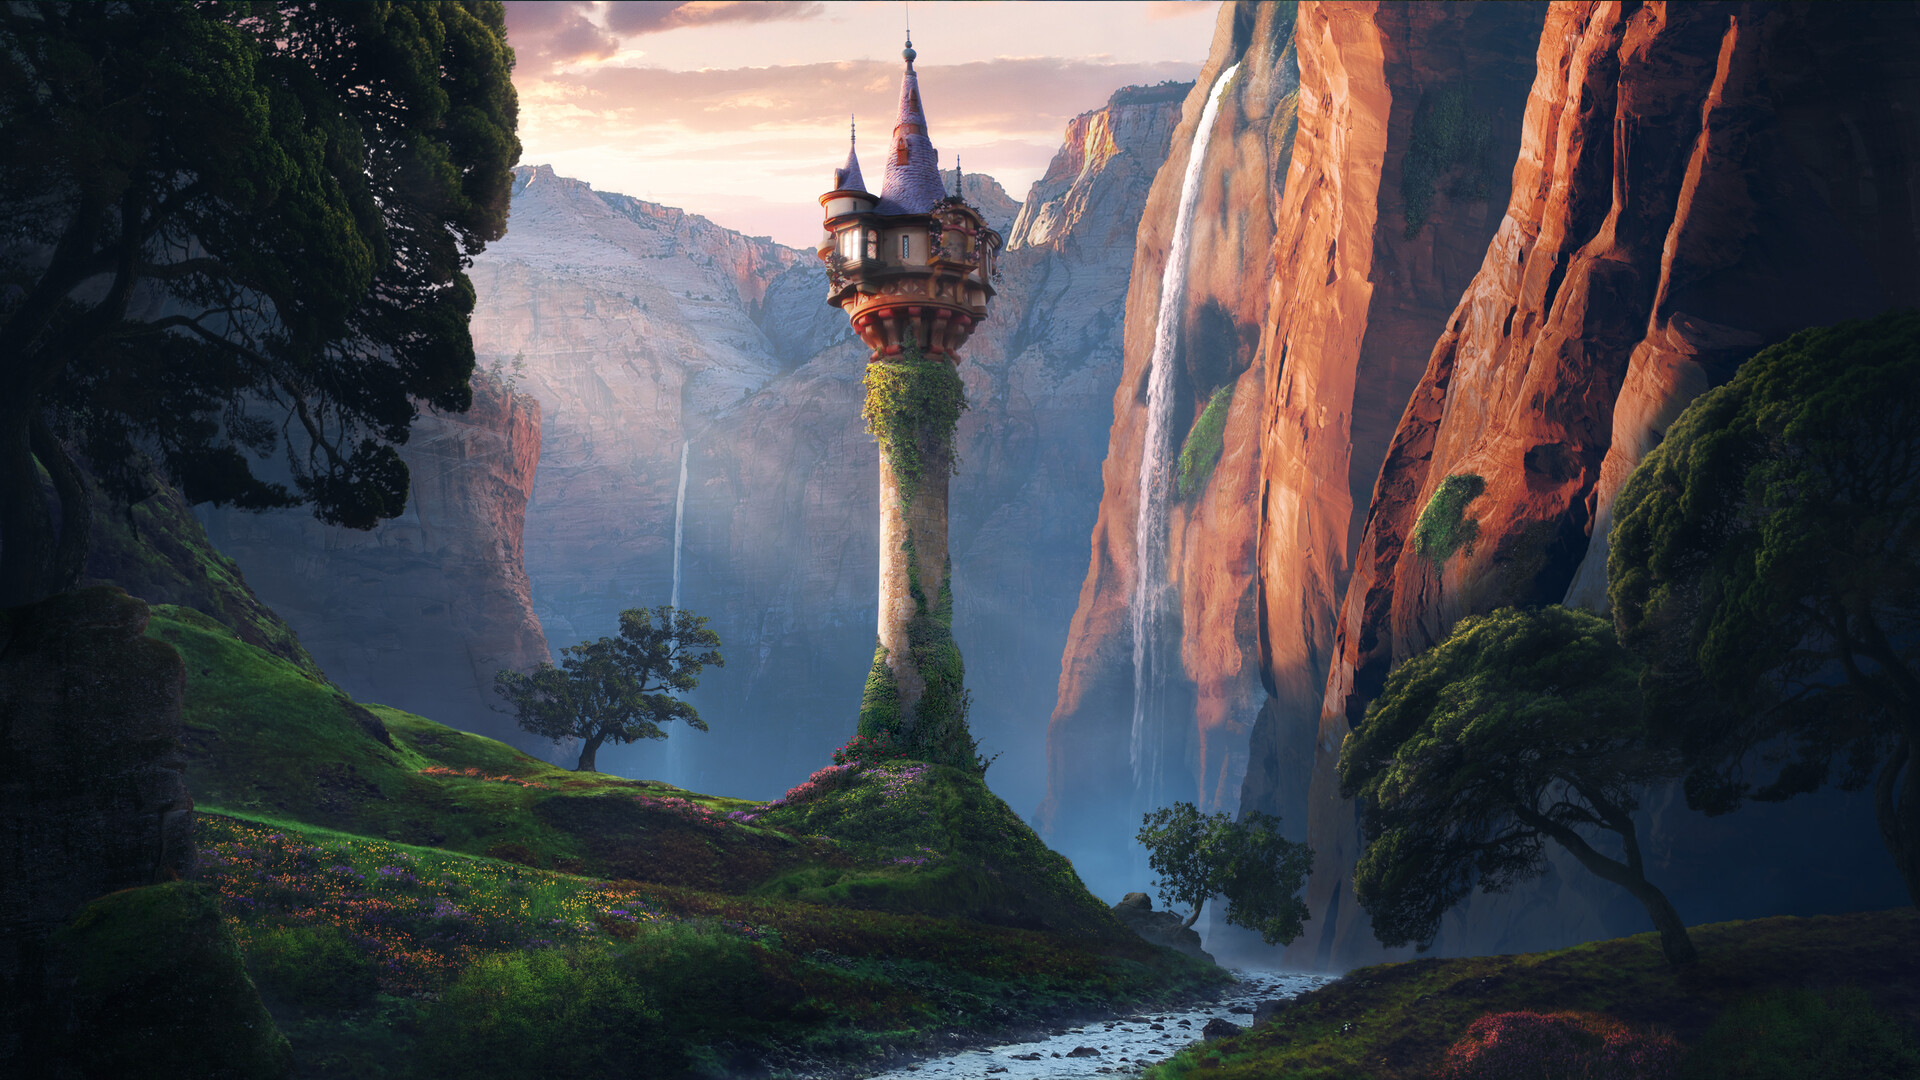 9. Disney Villains Nail Art with Rapunzel's Tower - wide 8